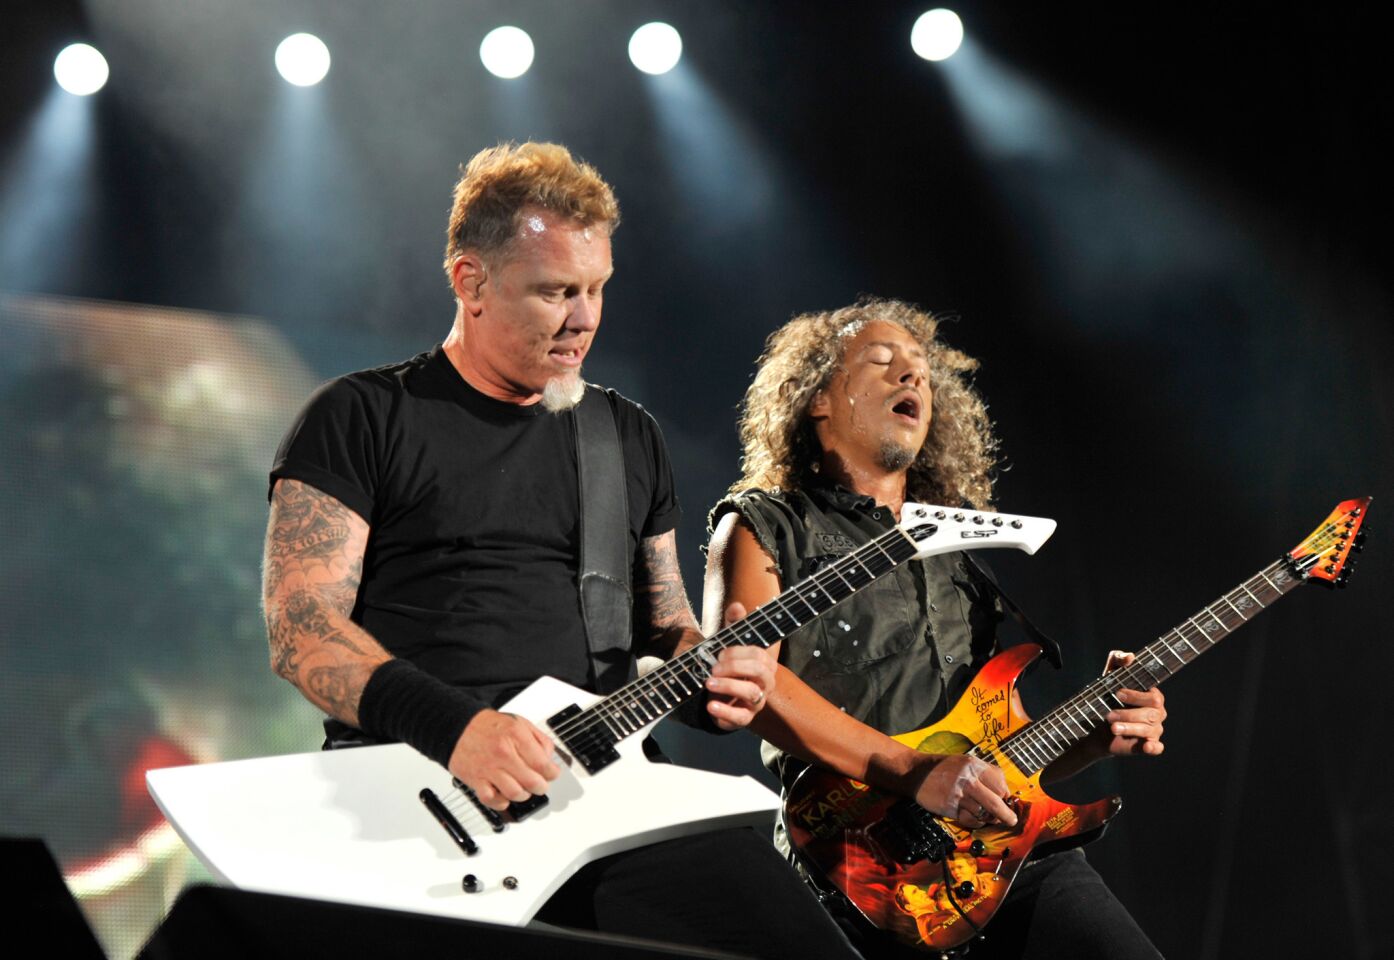 8. Metallica